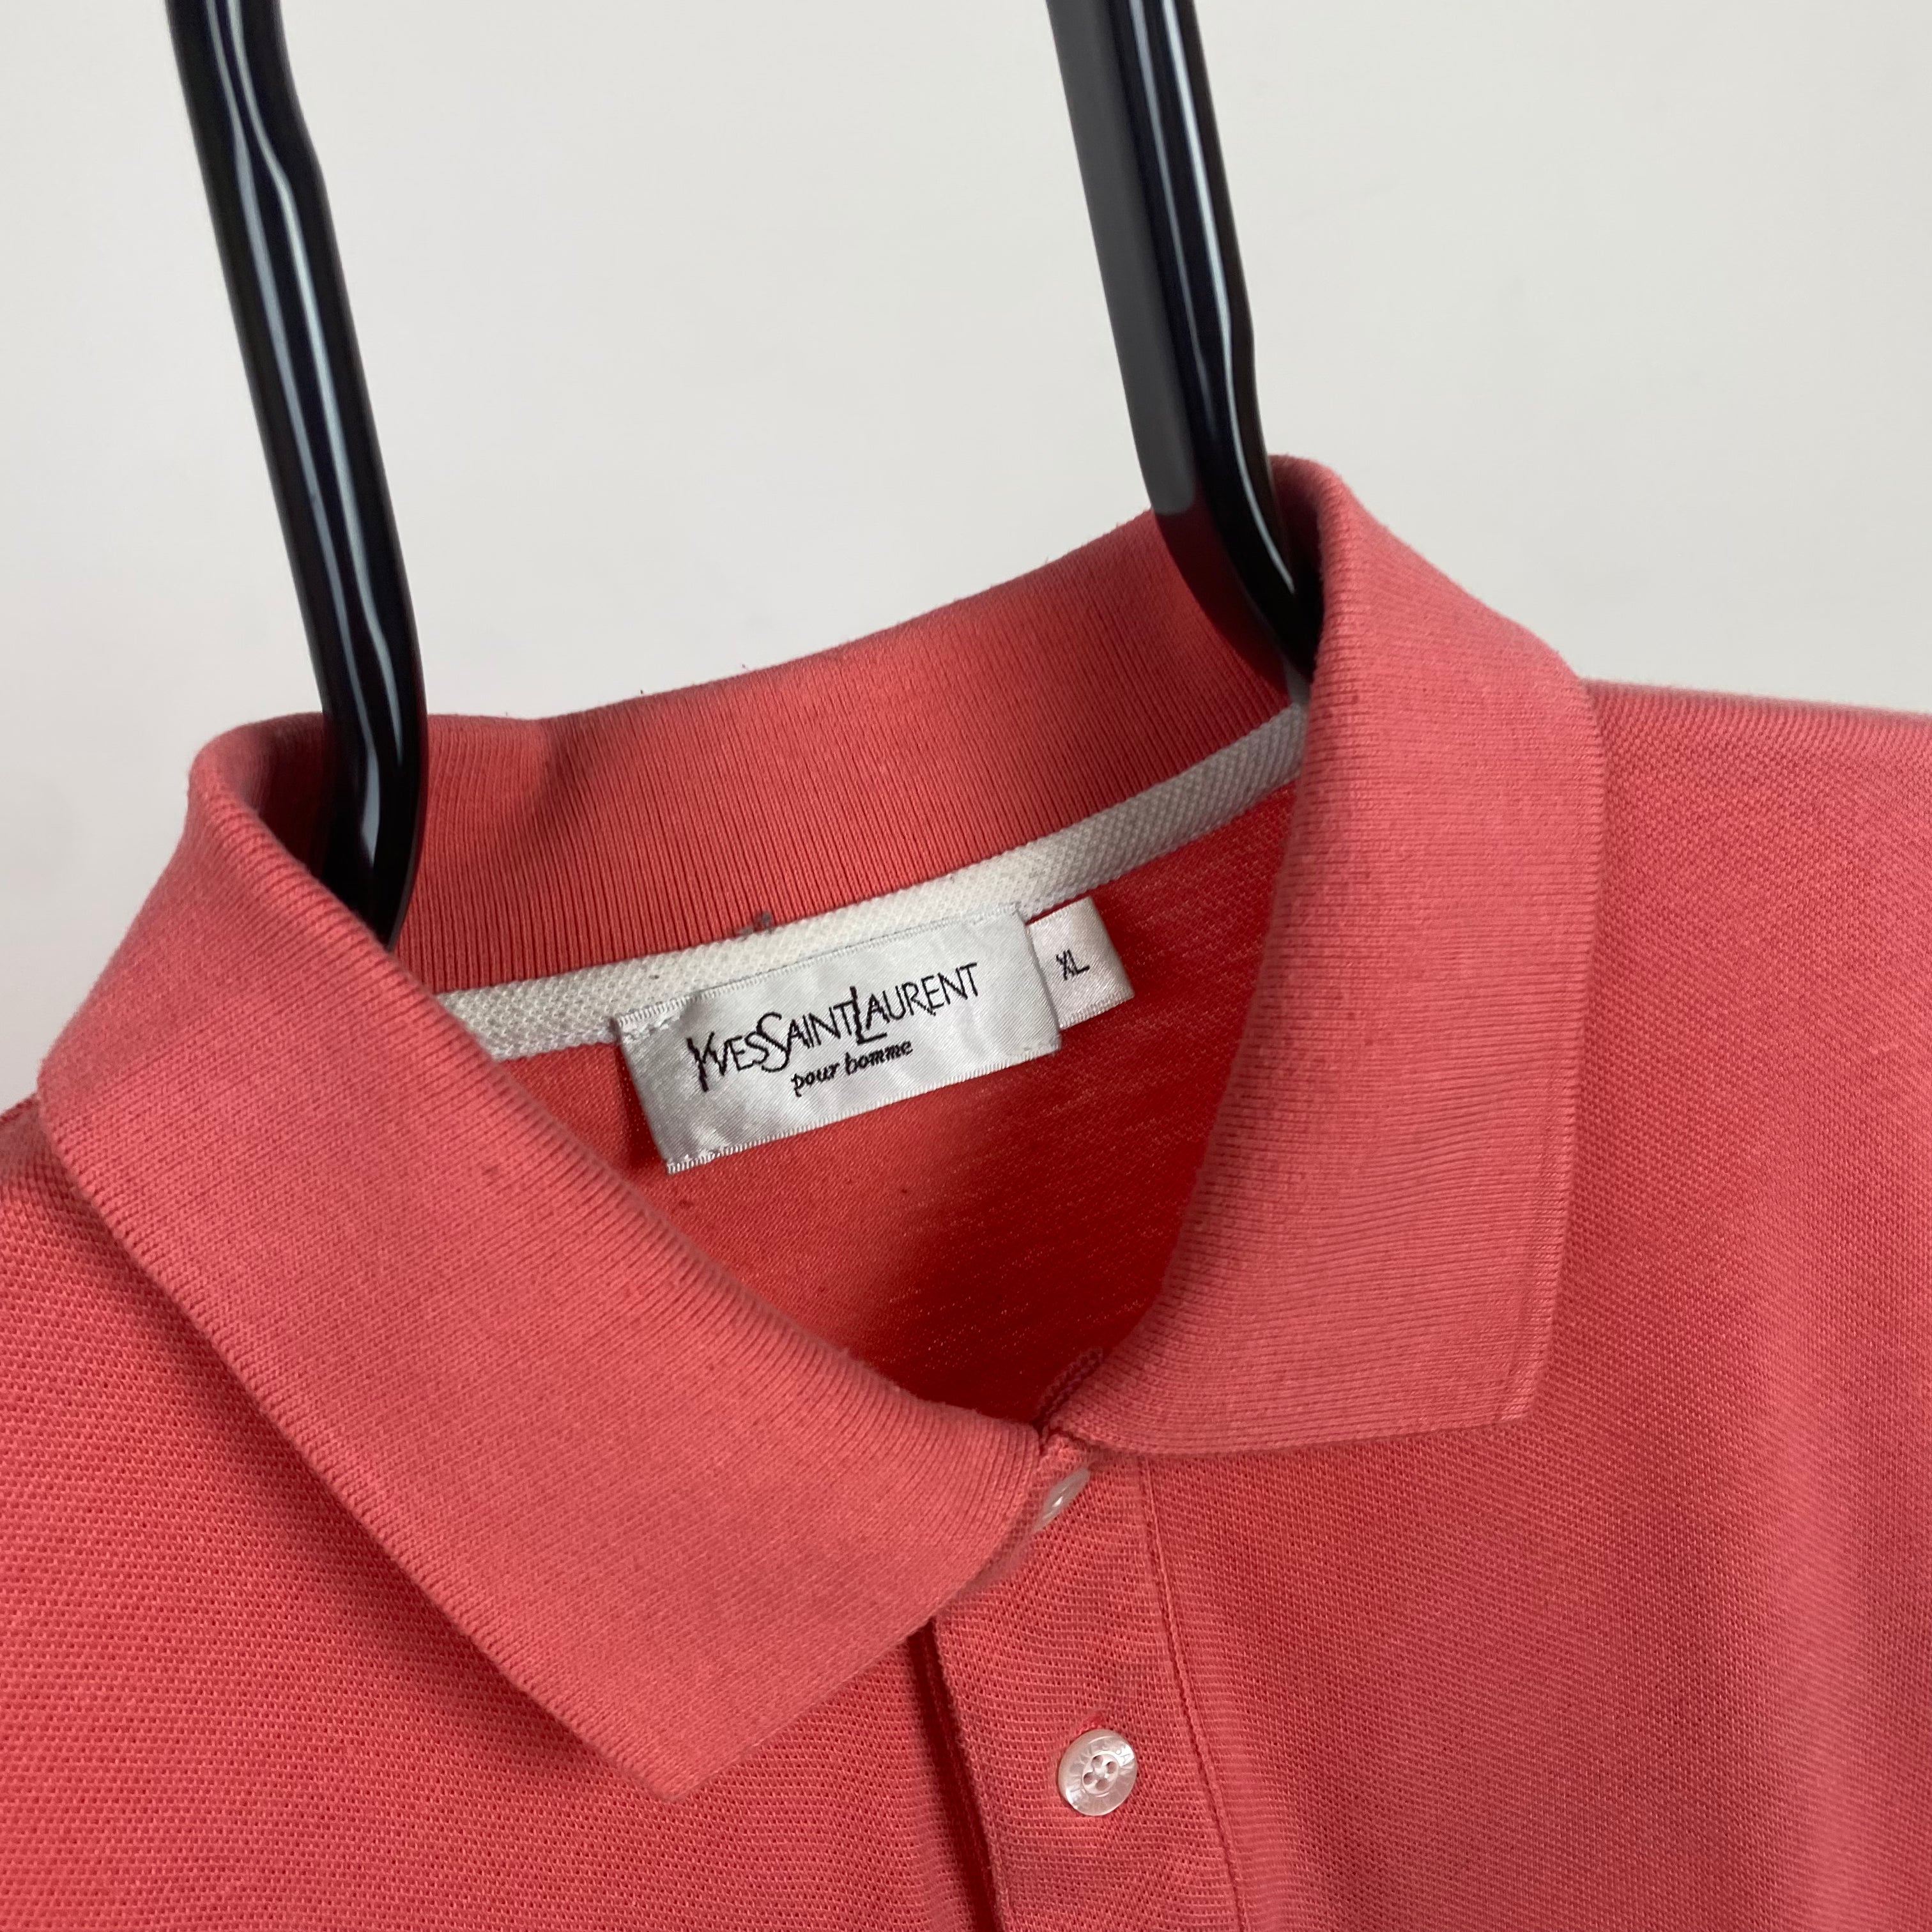 Vintage 90s Yves Saint Laurent YSL polo t-shirt color pink size XL